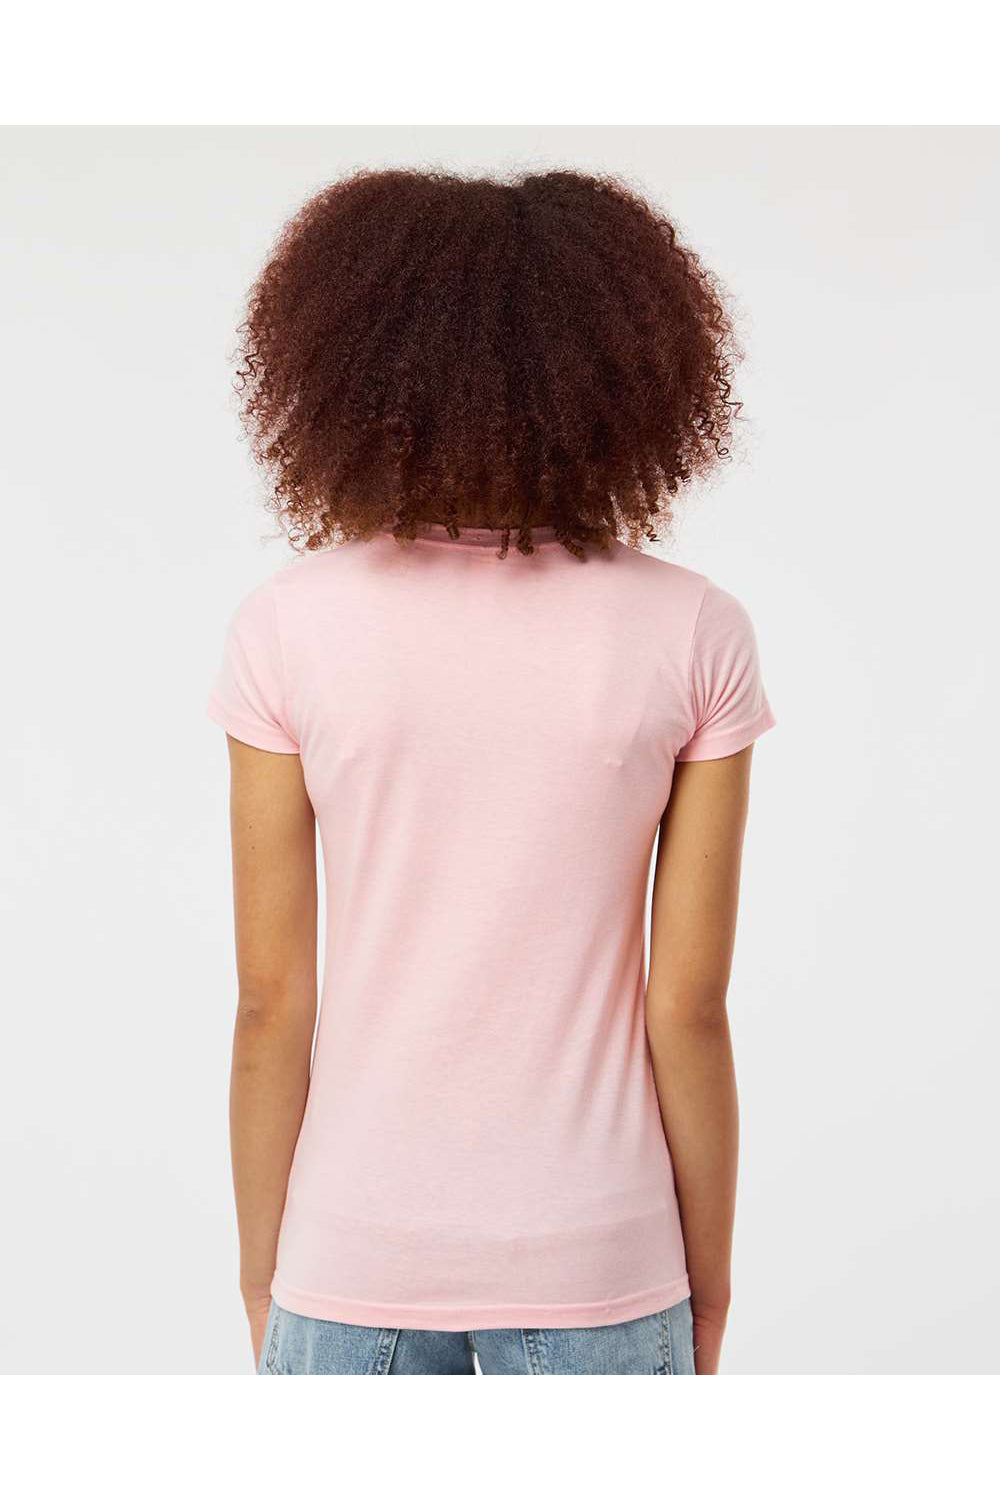 Tultex 213 Womens Fine Jersey Slim Fit Short Sleeve Crewneck T-Shirt Pink Model Back